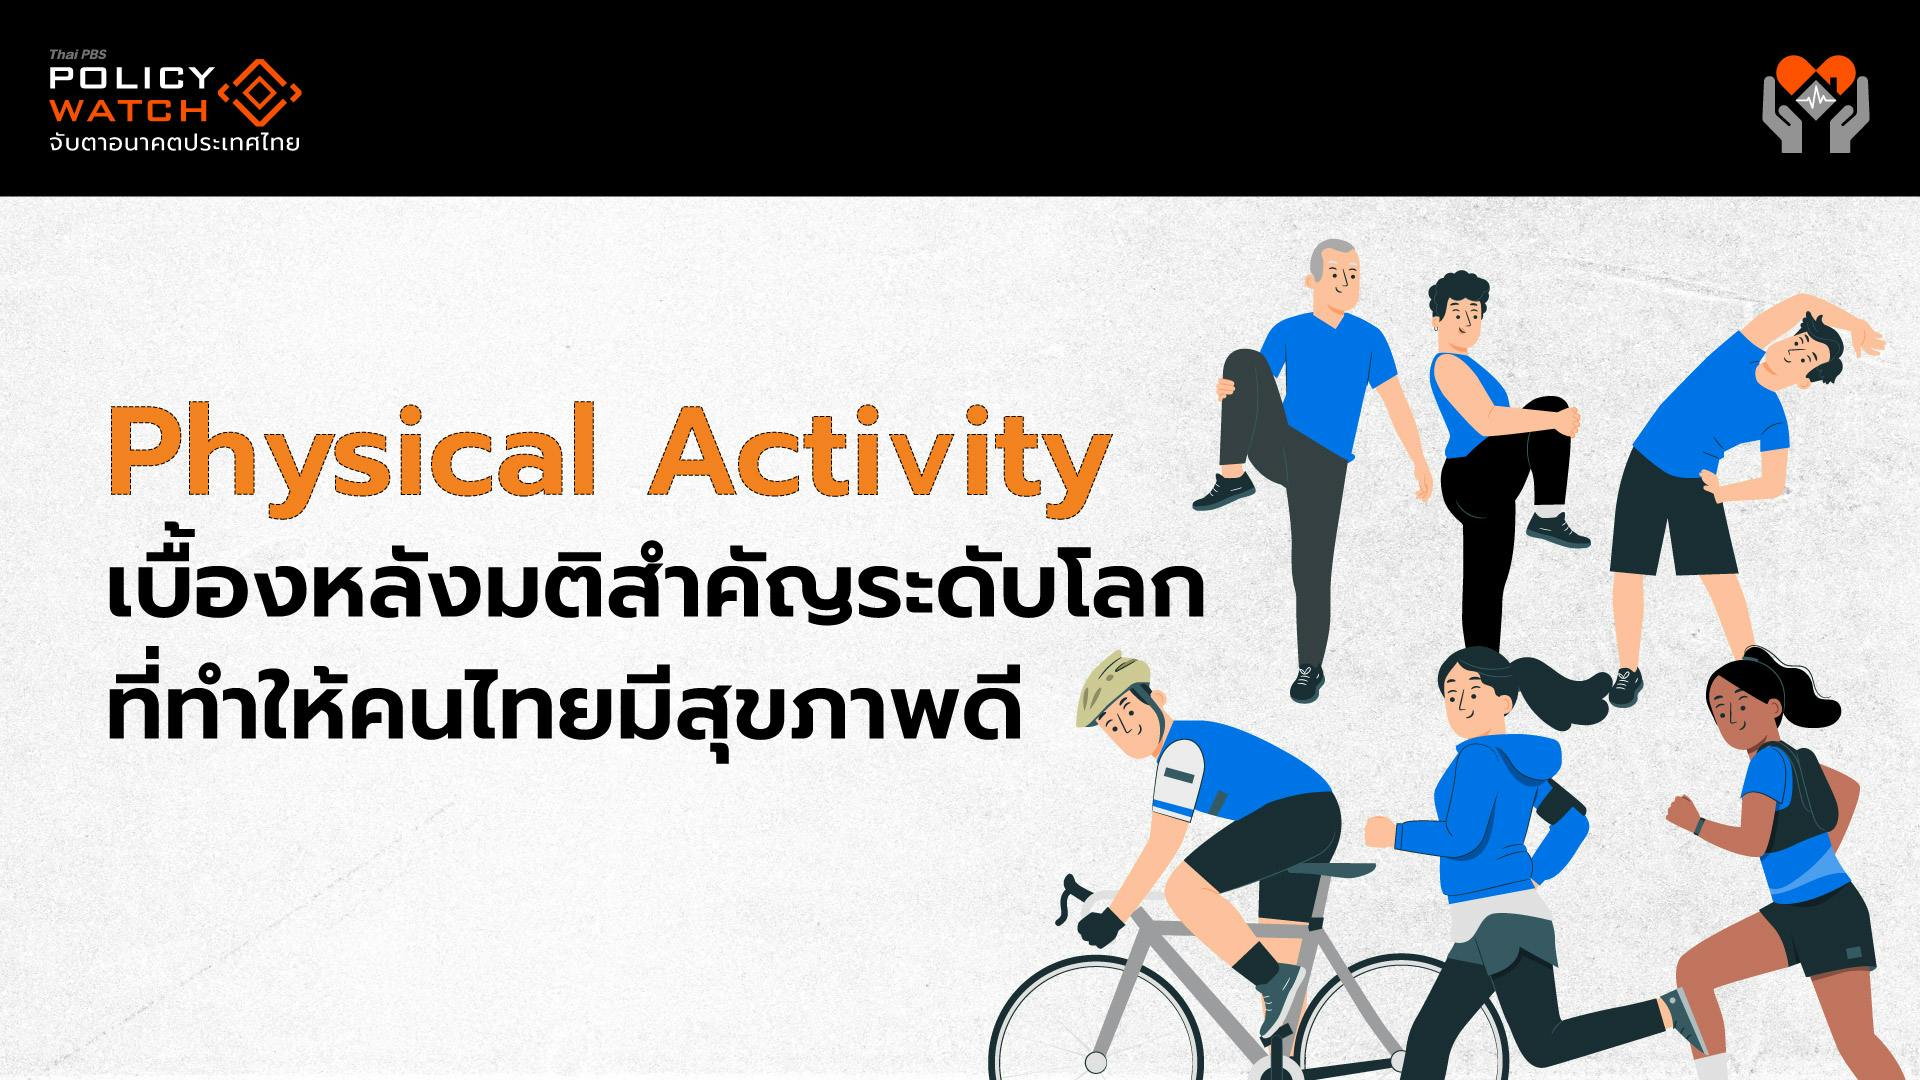 Physical Activity เบื้องหลังมติสำคัญระดับโลกที่ทำให้คนไทยมีสุขภาพดี